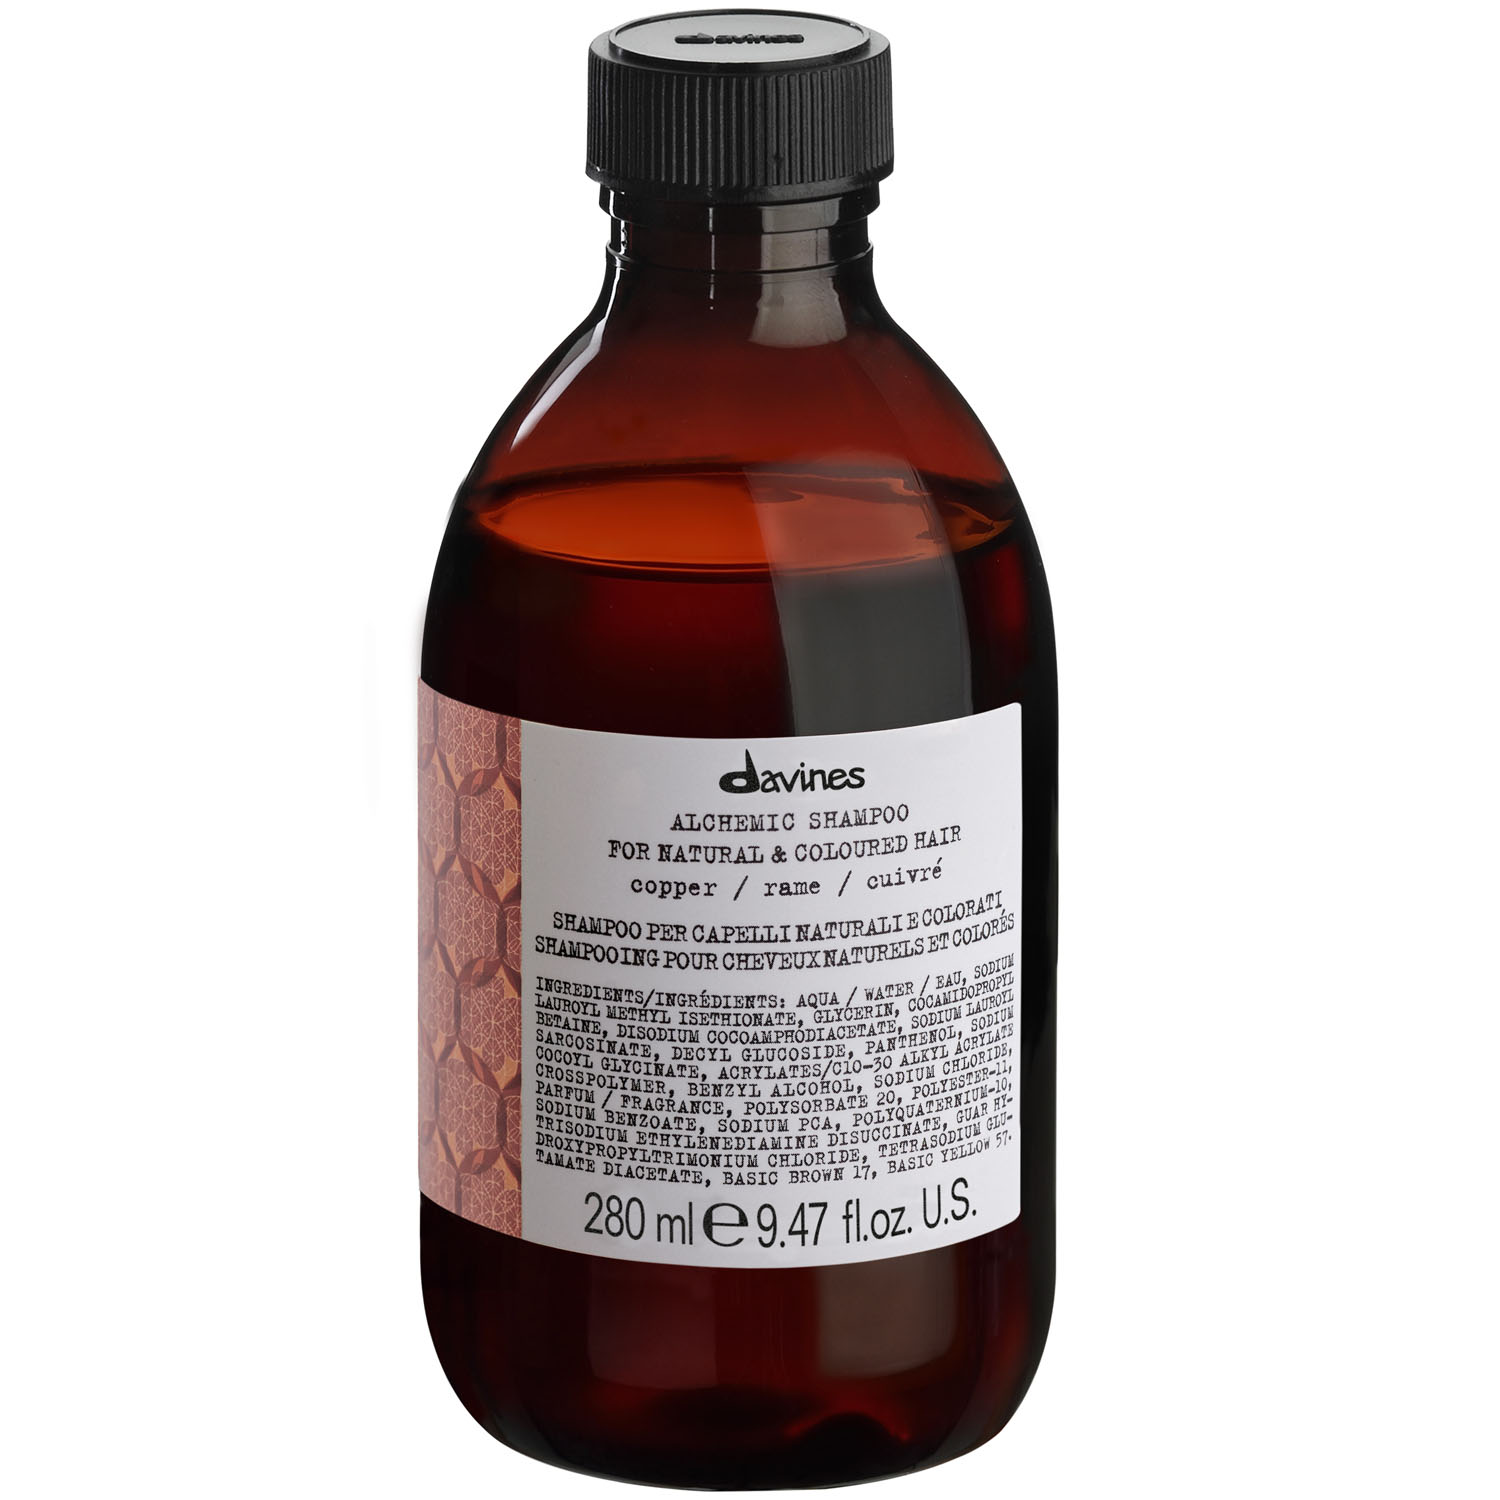 Davines Шампунь для натуральных и окрашенных волос, медный Alchemic Shampoo For Natural And Coloured Hair (copper), 280 мл (Davines, Alchemic)